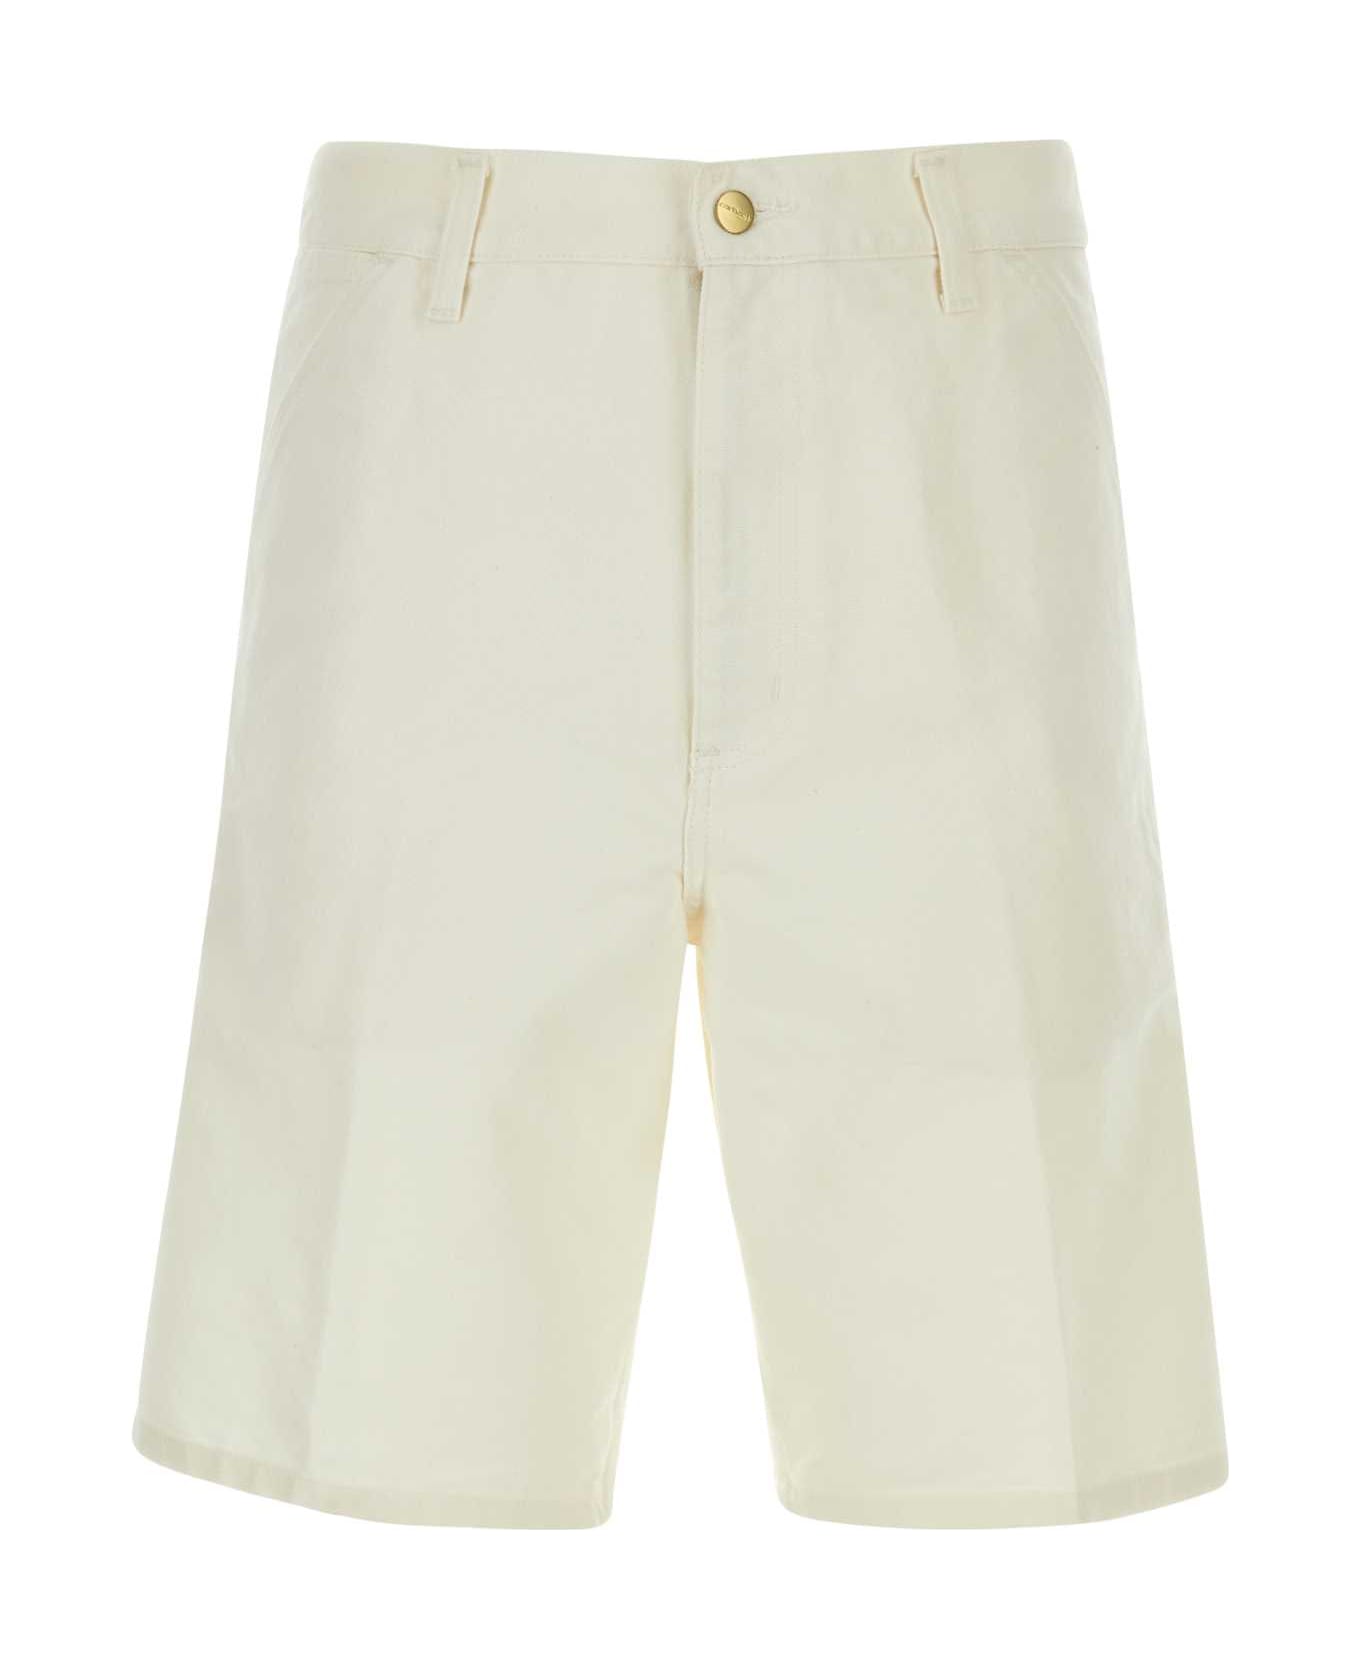 Carhartt White Cotton Single Knee Short - WAX